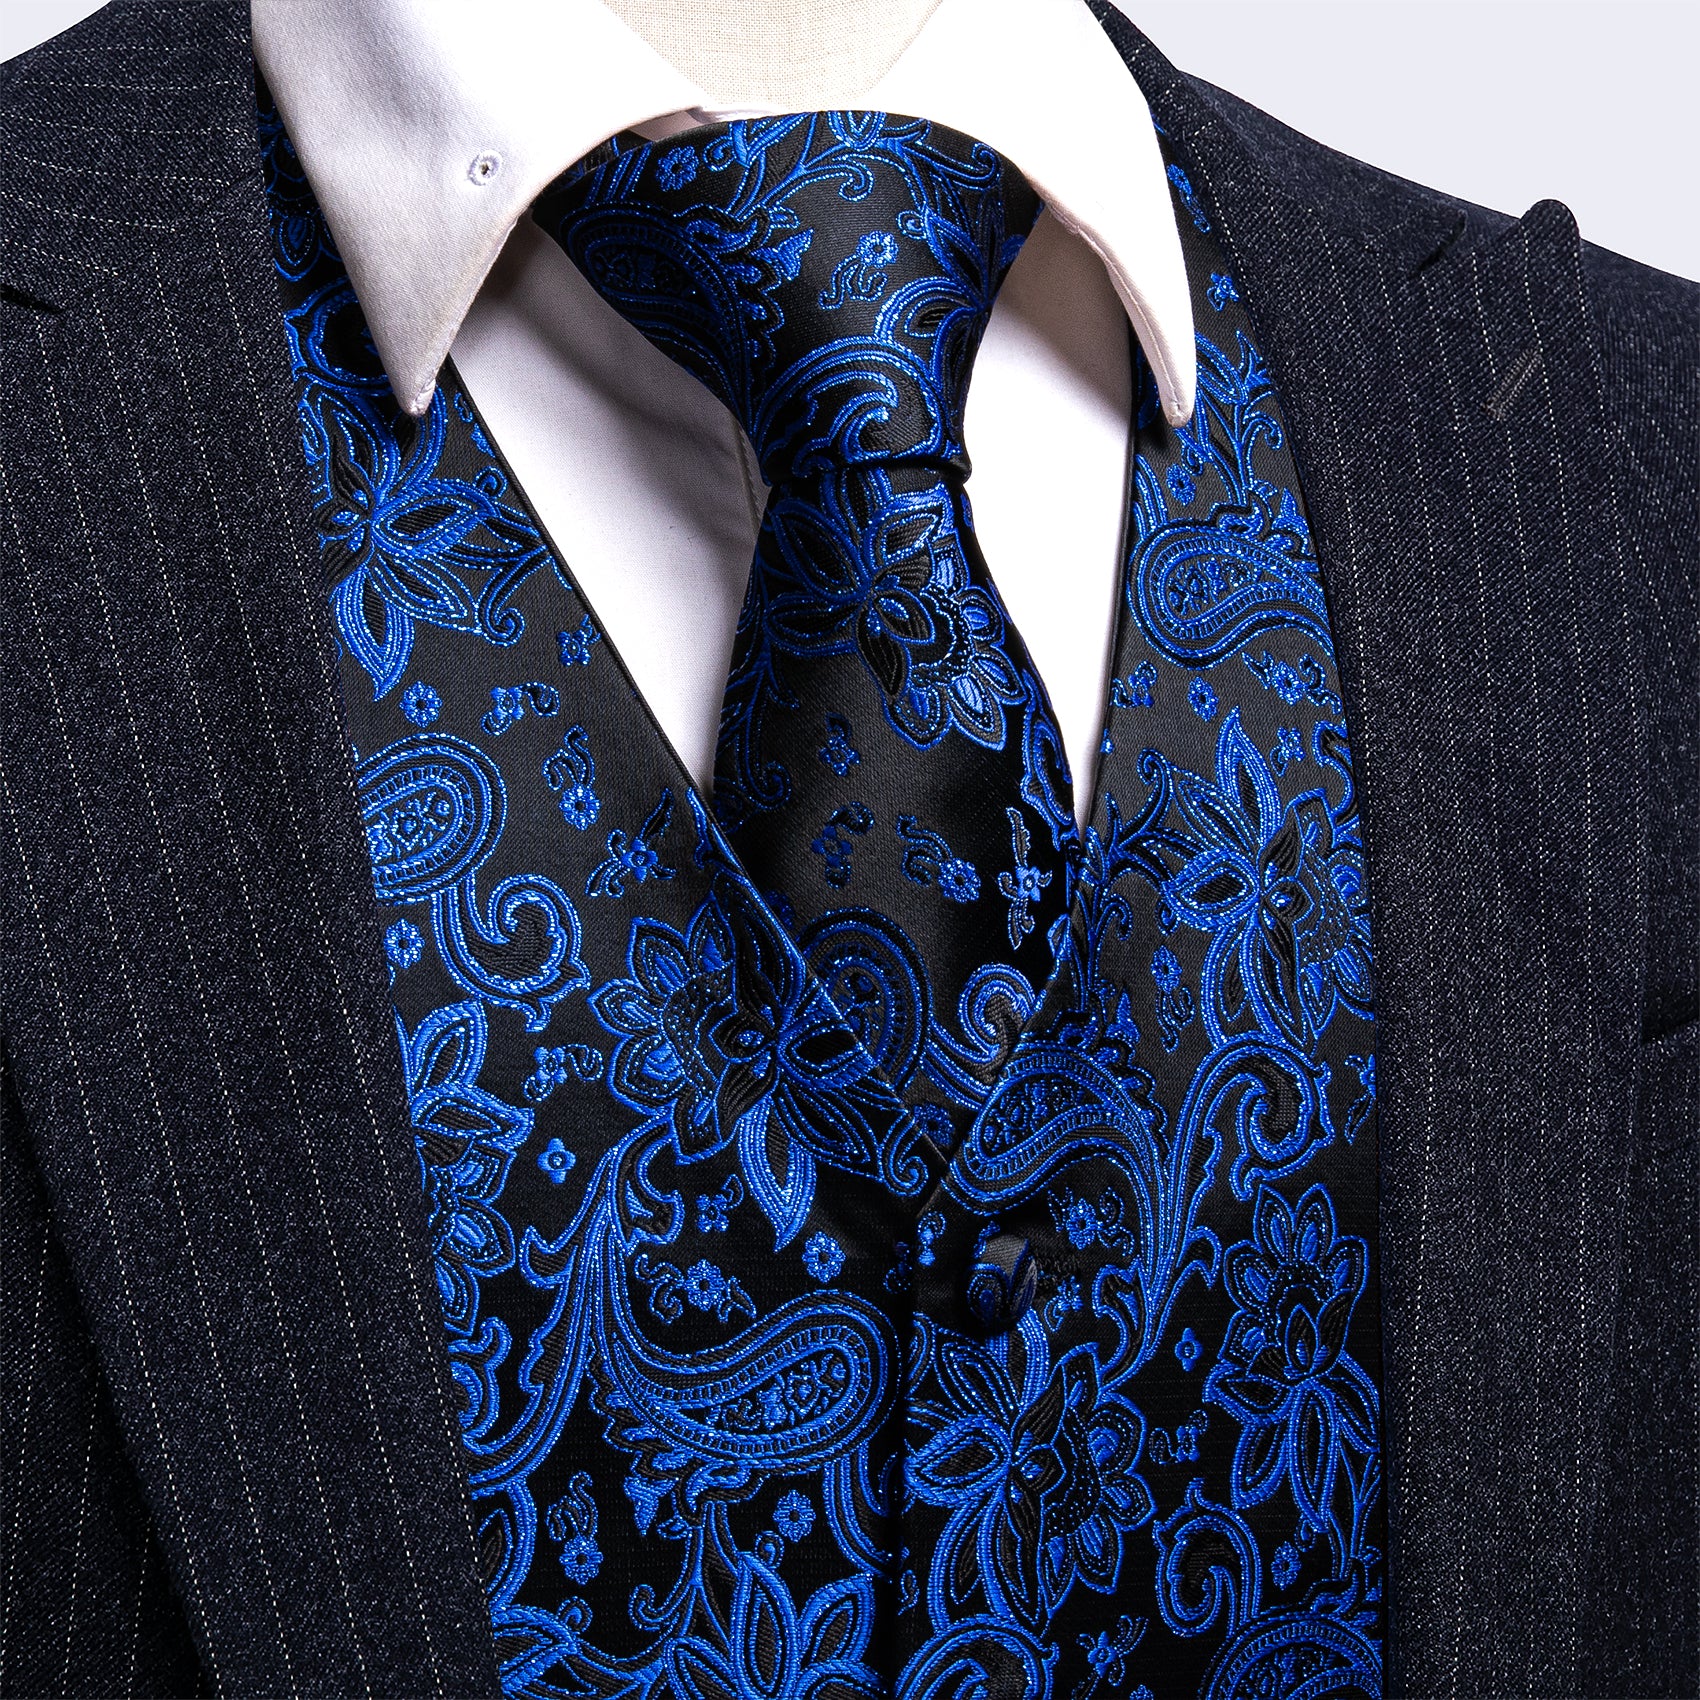 Men's Blue Black Floral Silk Vest Necktie Set